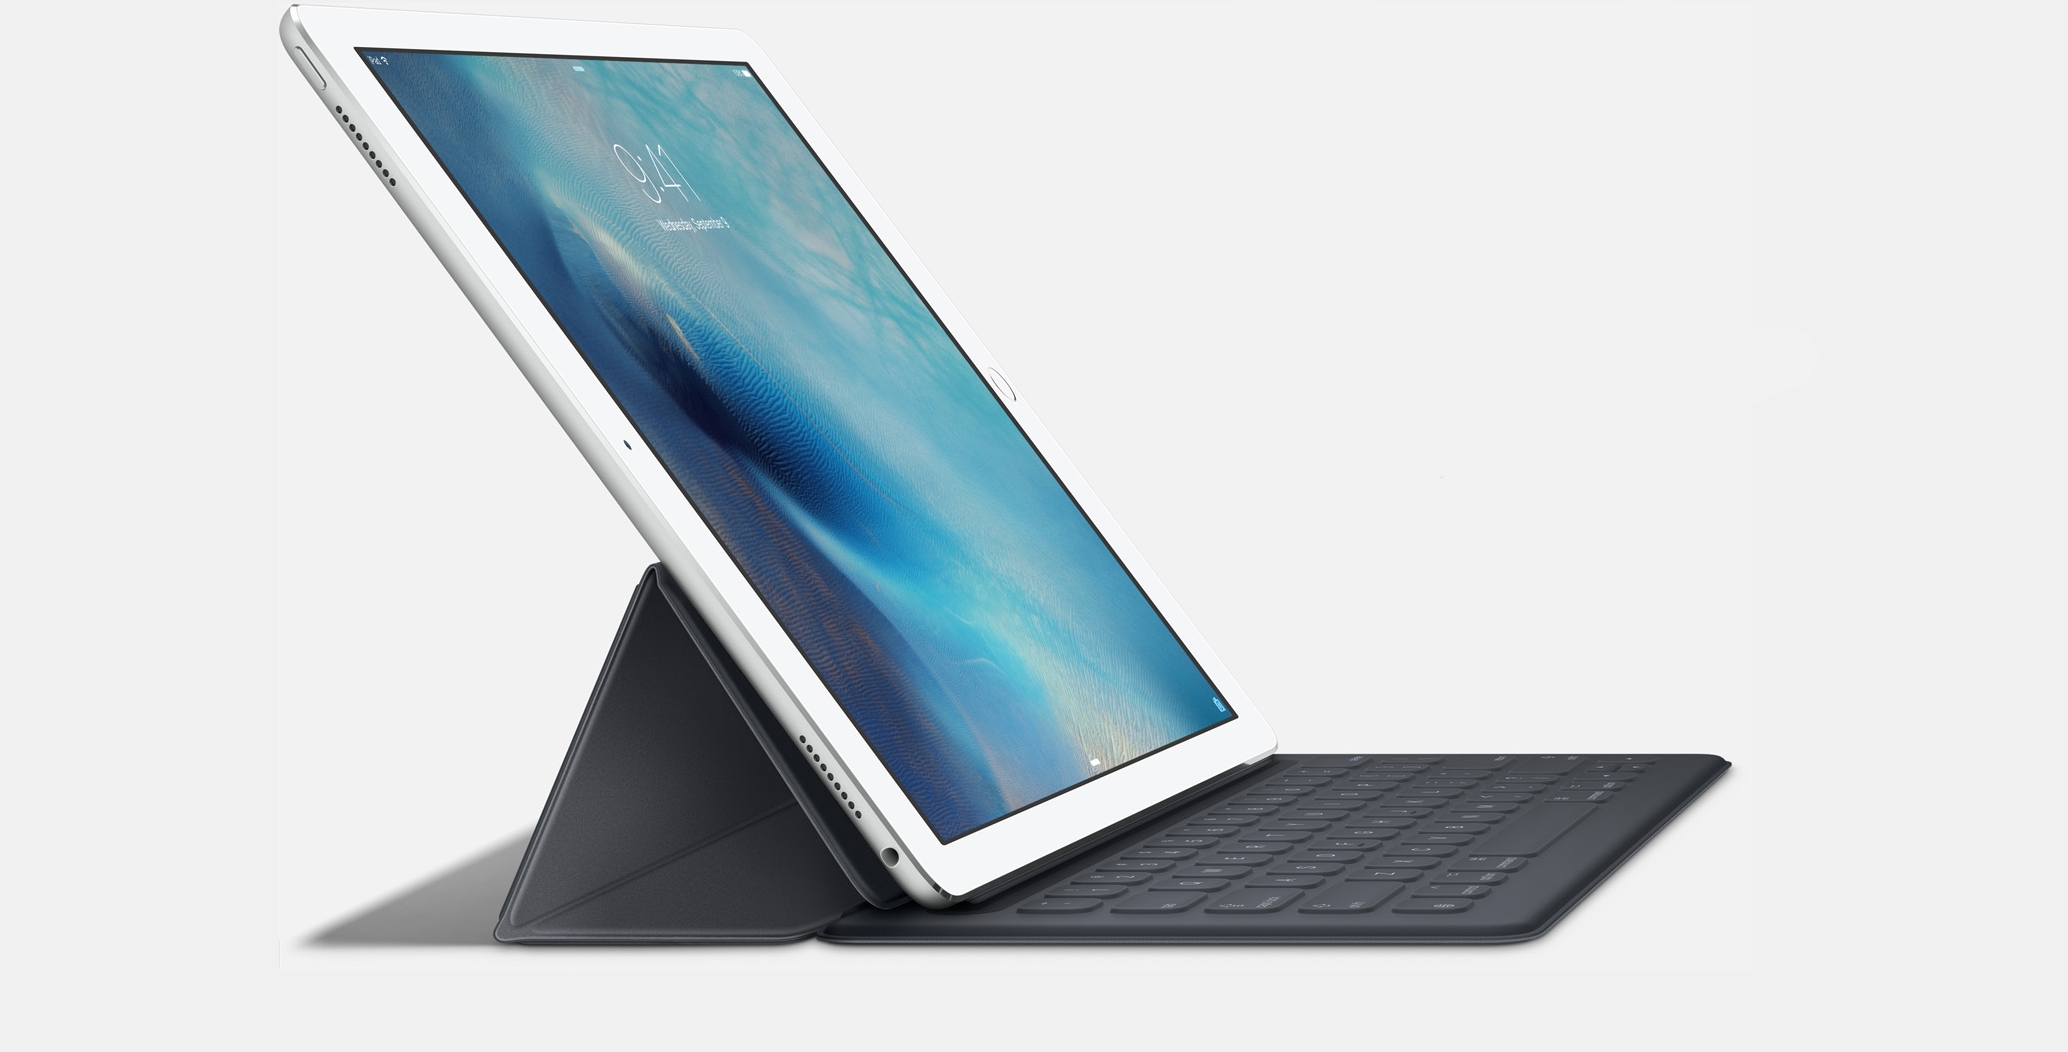 iPad Pro 9,7 tommer er på vei.